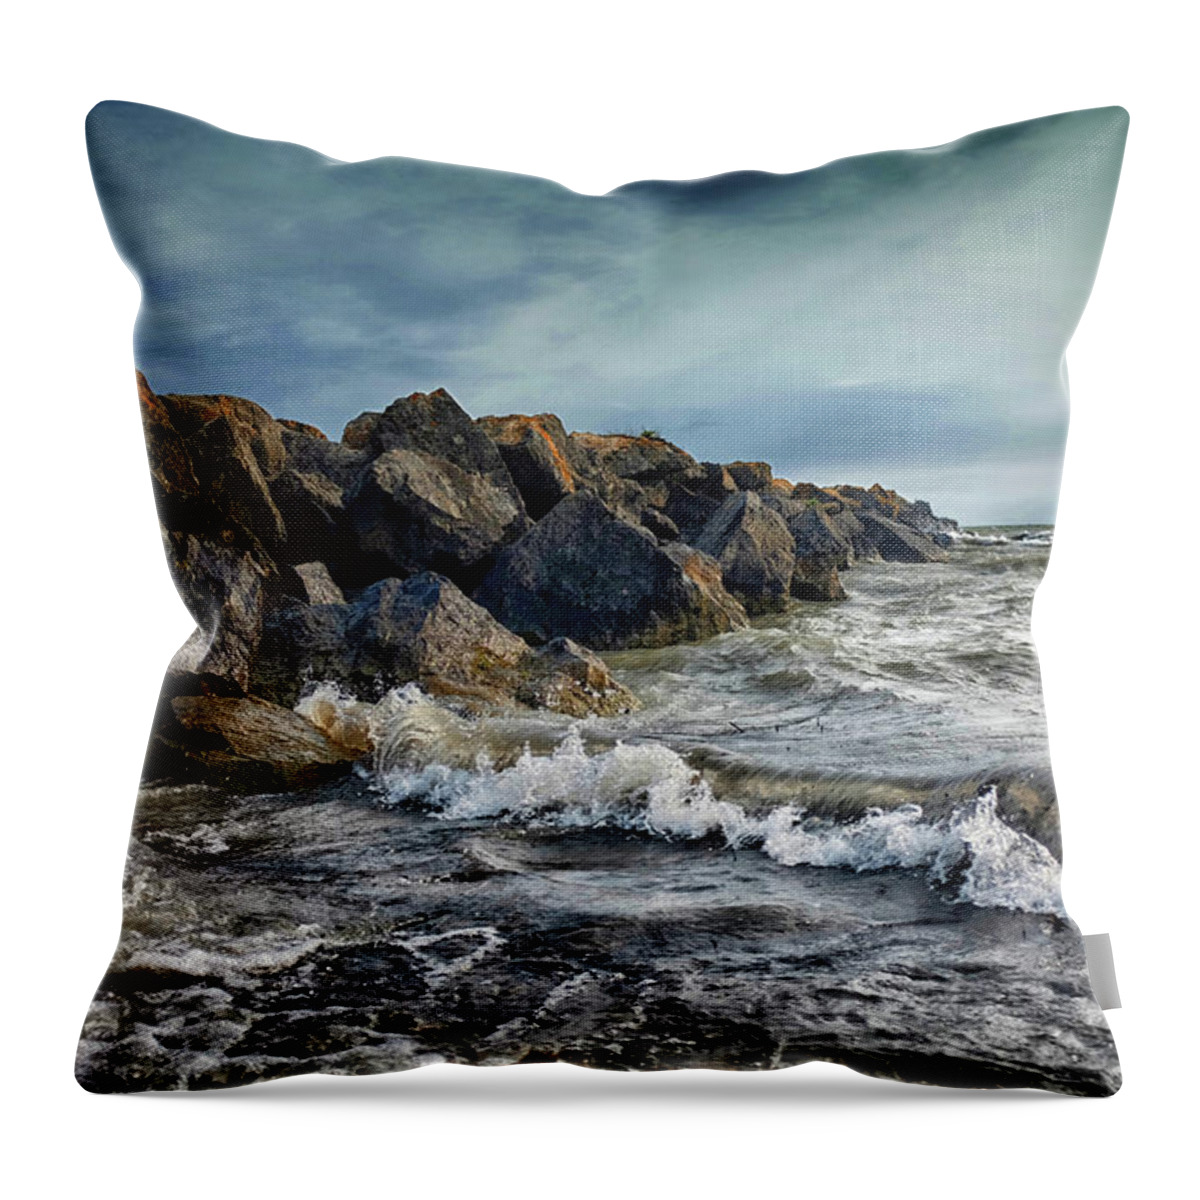 Water Throw Pillow featuring the photograph Beach Break Wall by Brent Buchner